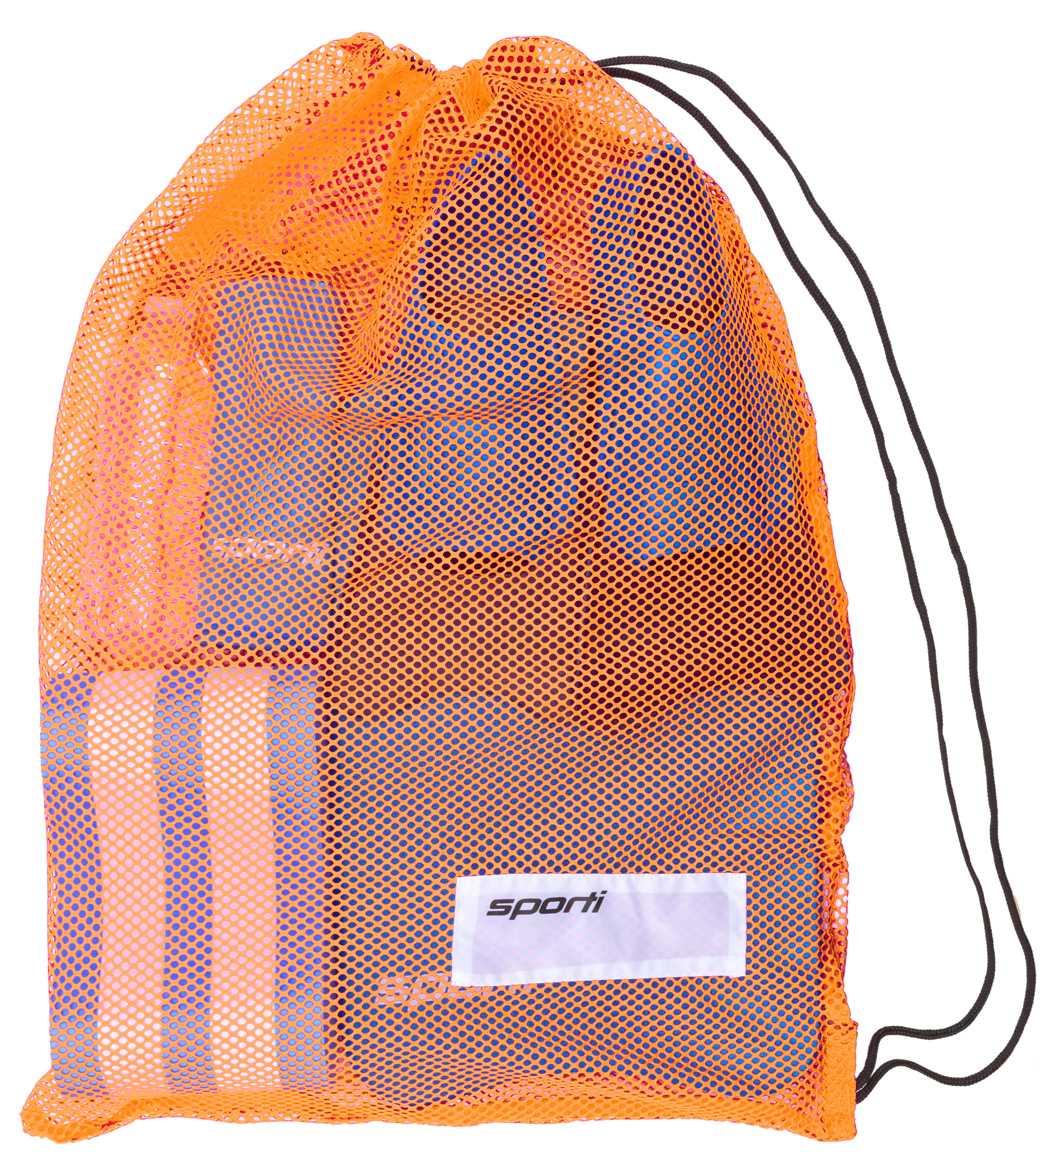 Sporti Mesh Bag - Orange Polyester - Swimoutlet.com